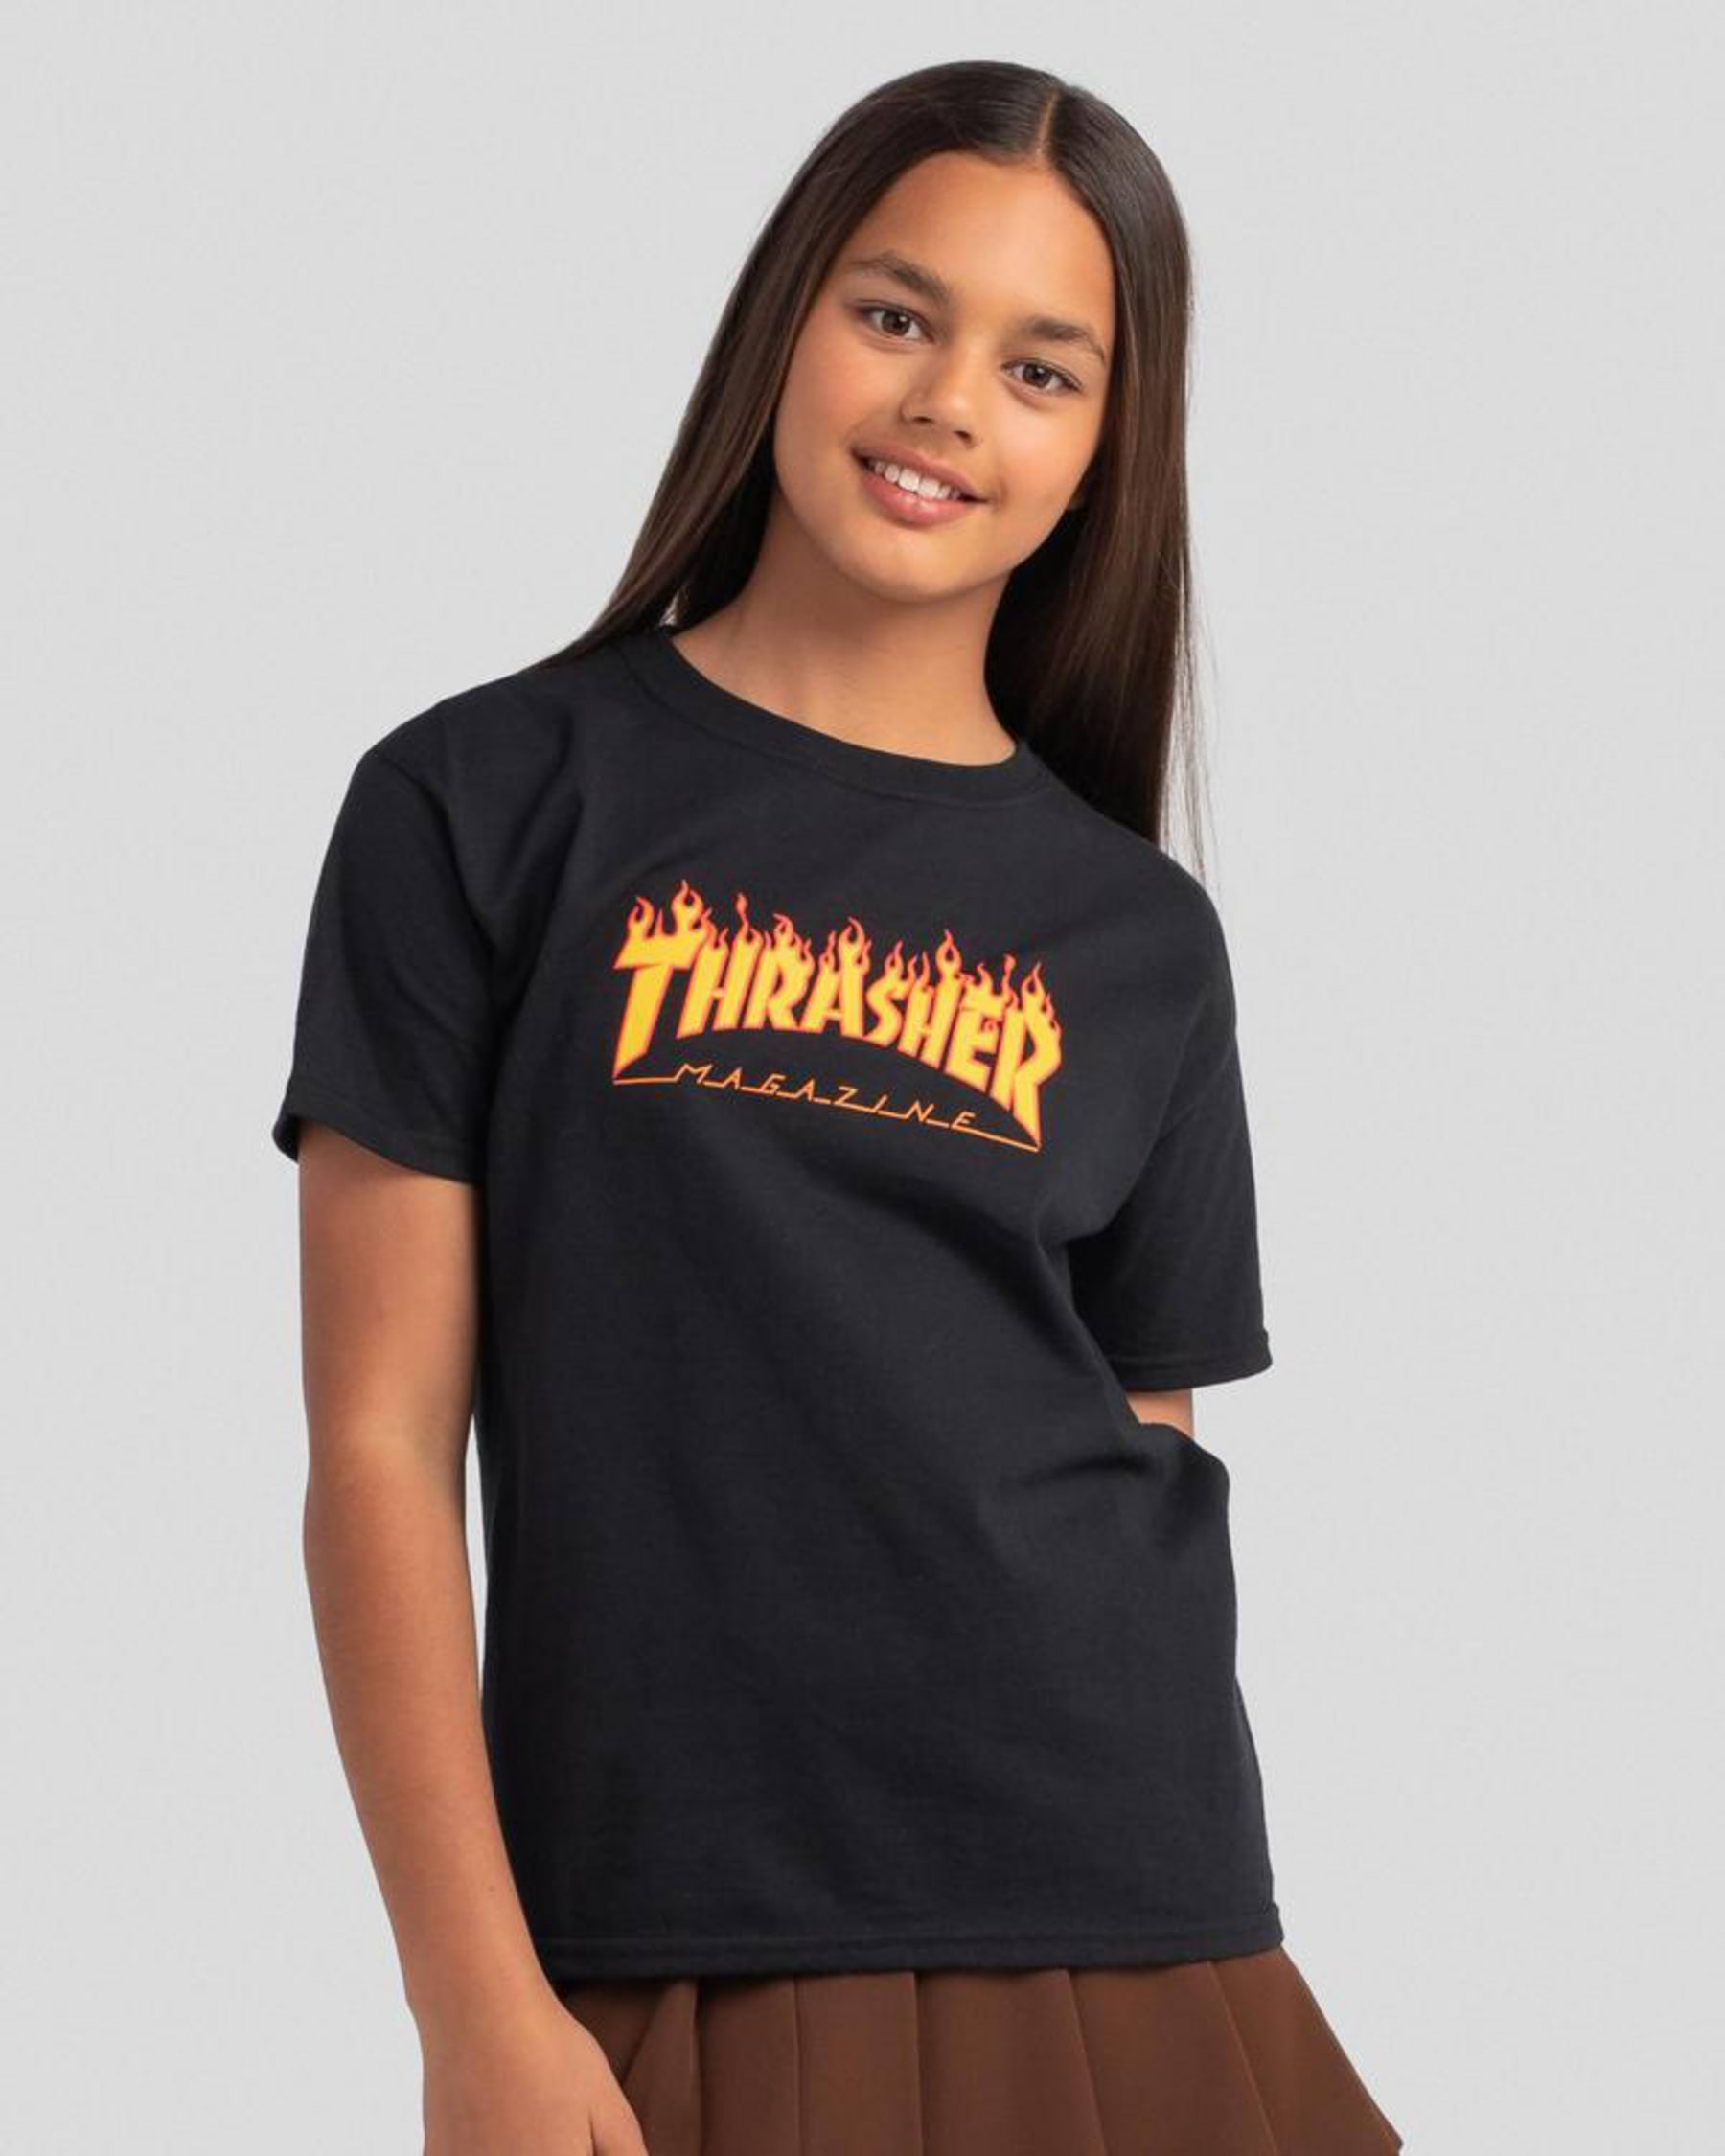 Thrasher Blue Flame Shirt High-Quality Printed Brand